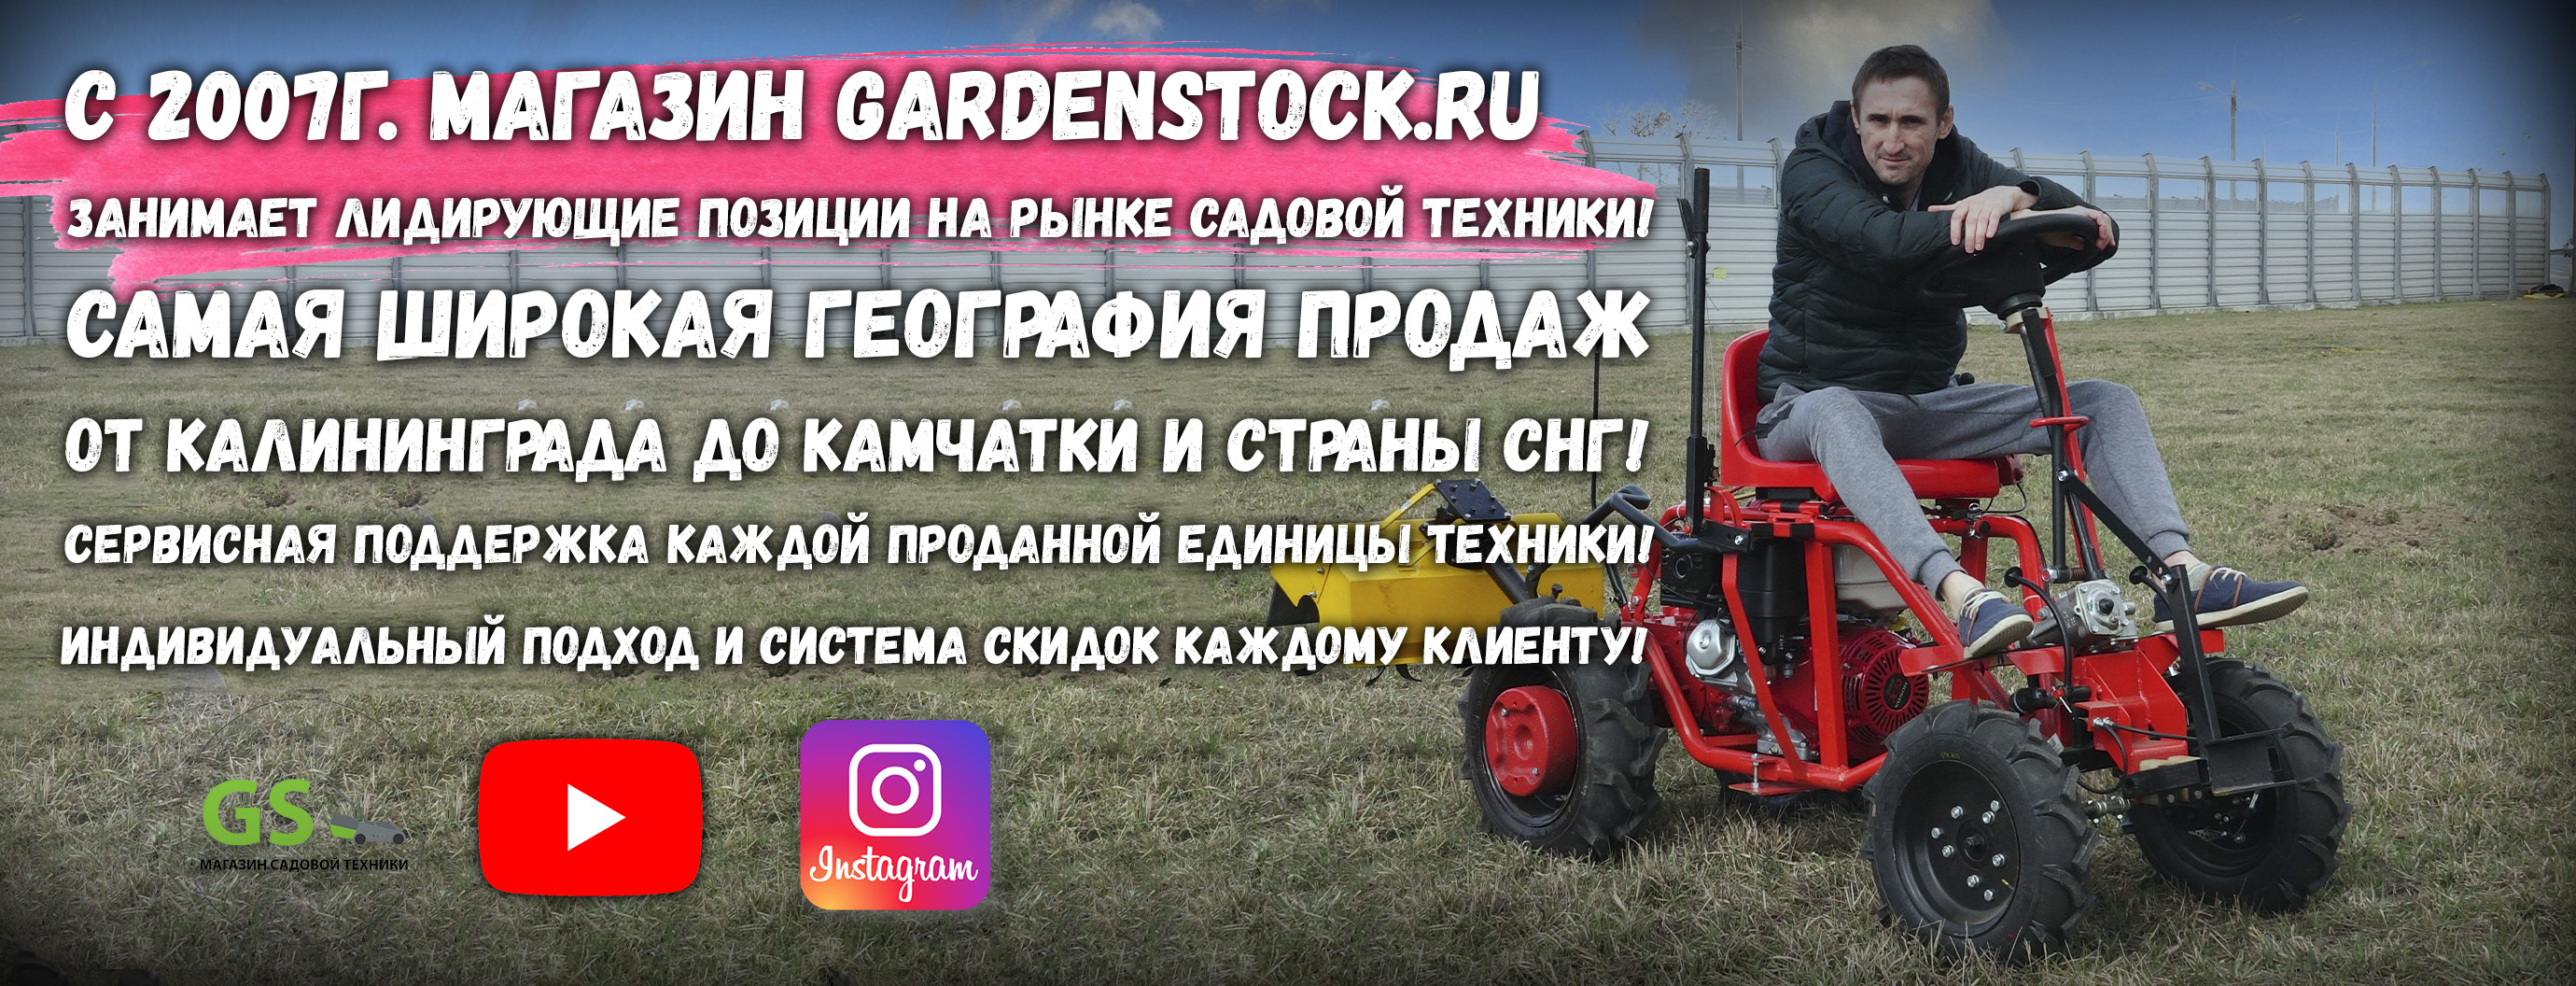 Gardenstock Ru Интернет Магазин